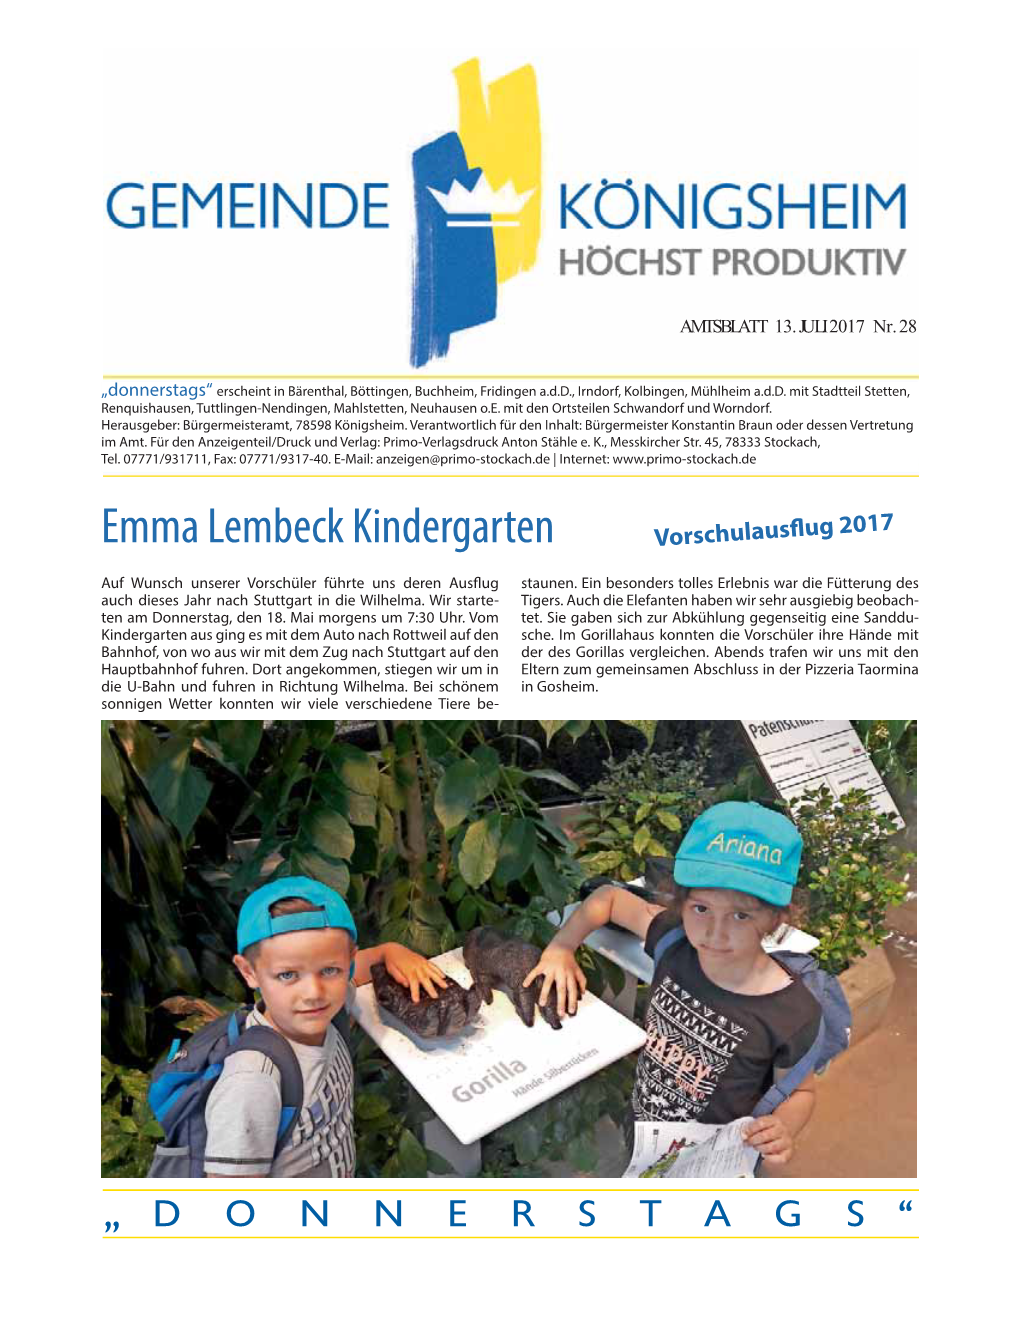 Emma Lembeck Kindergarten Vorschulausflug 2017